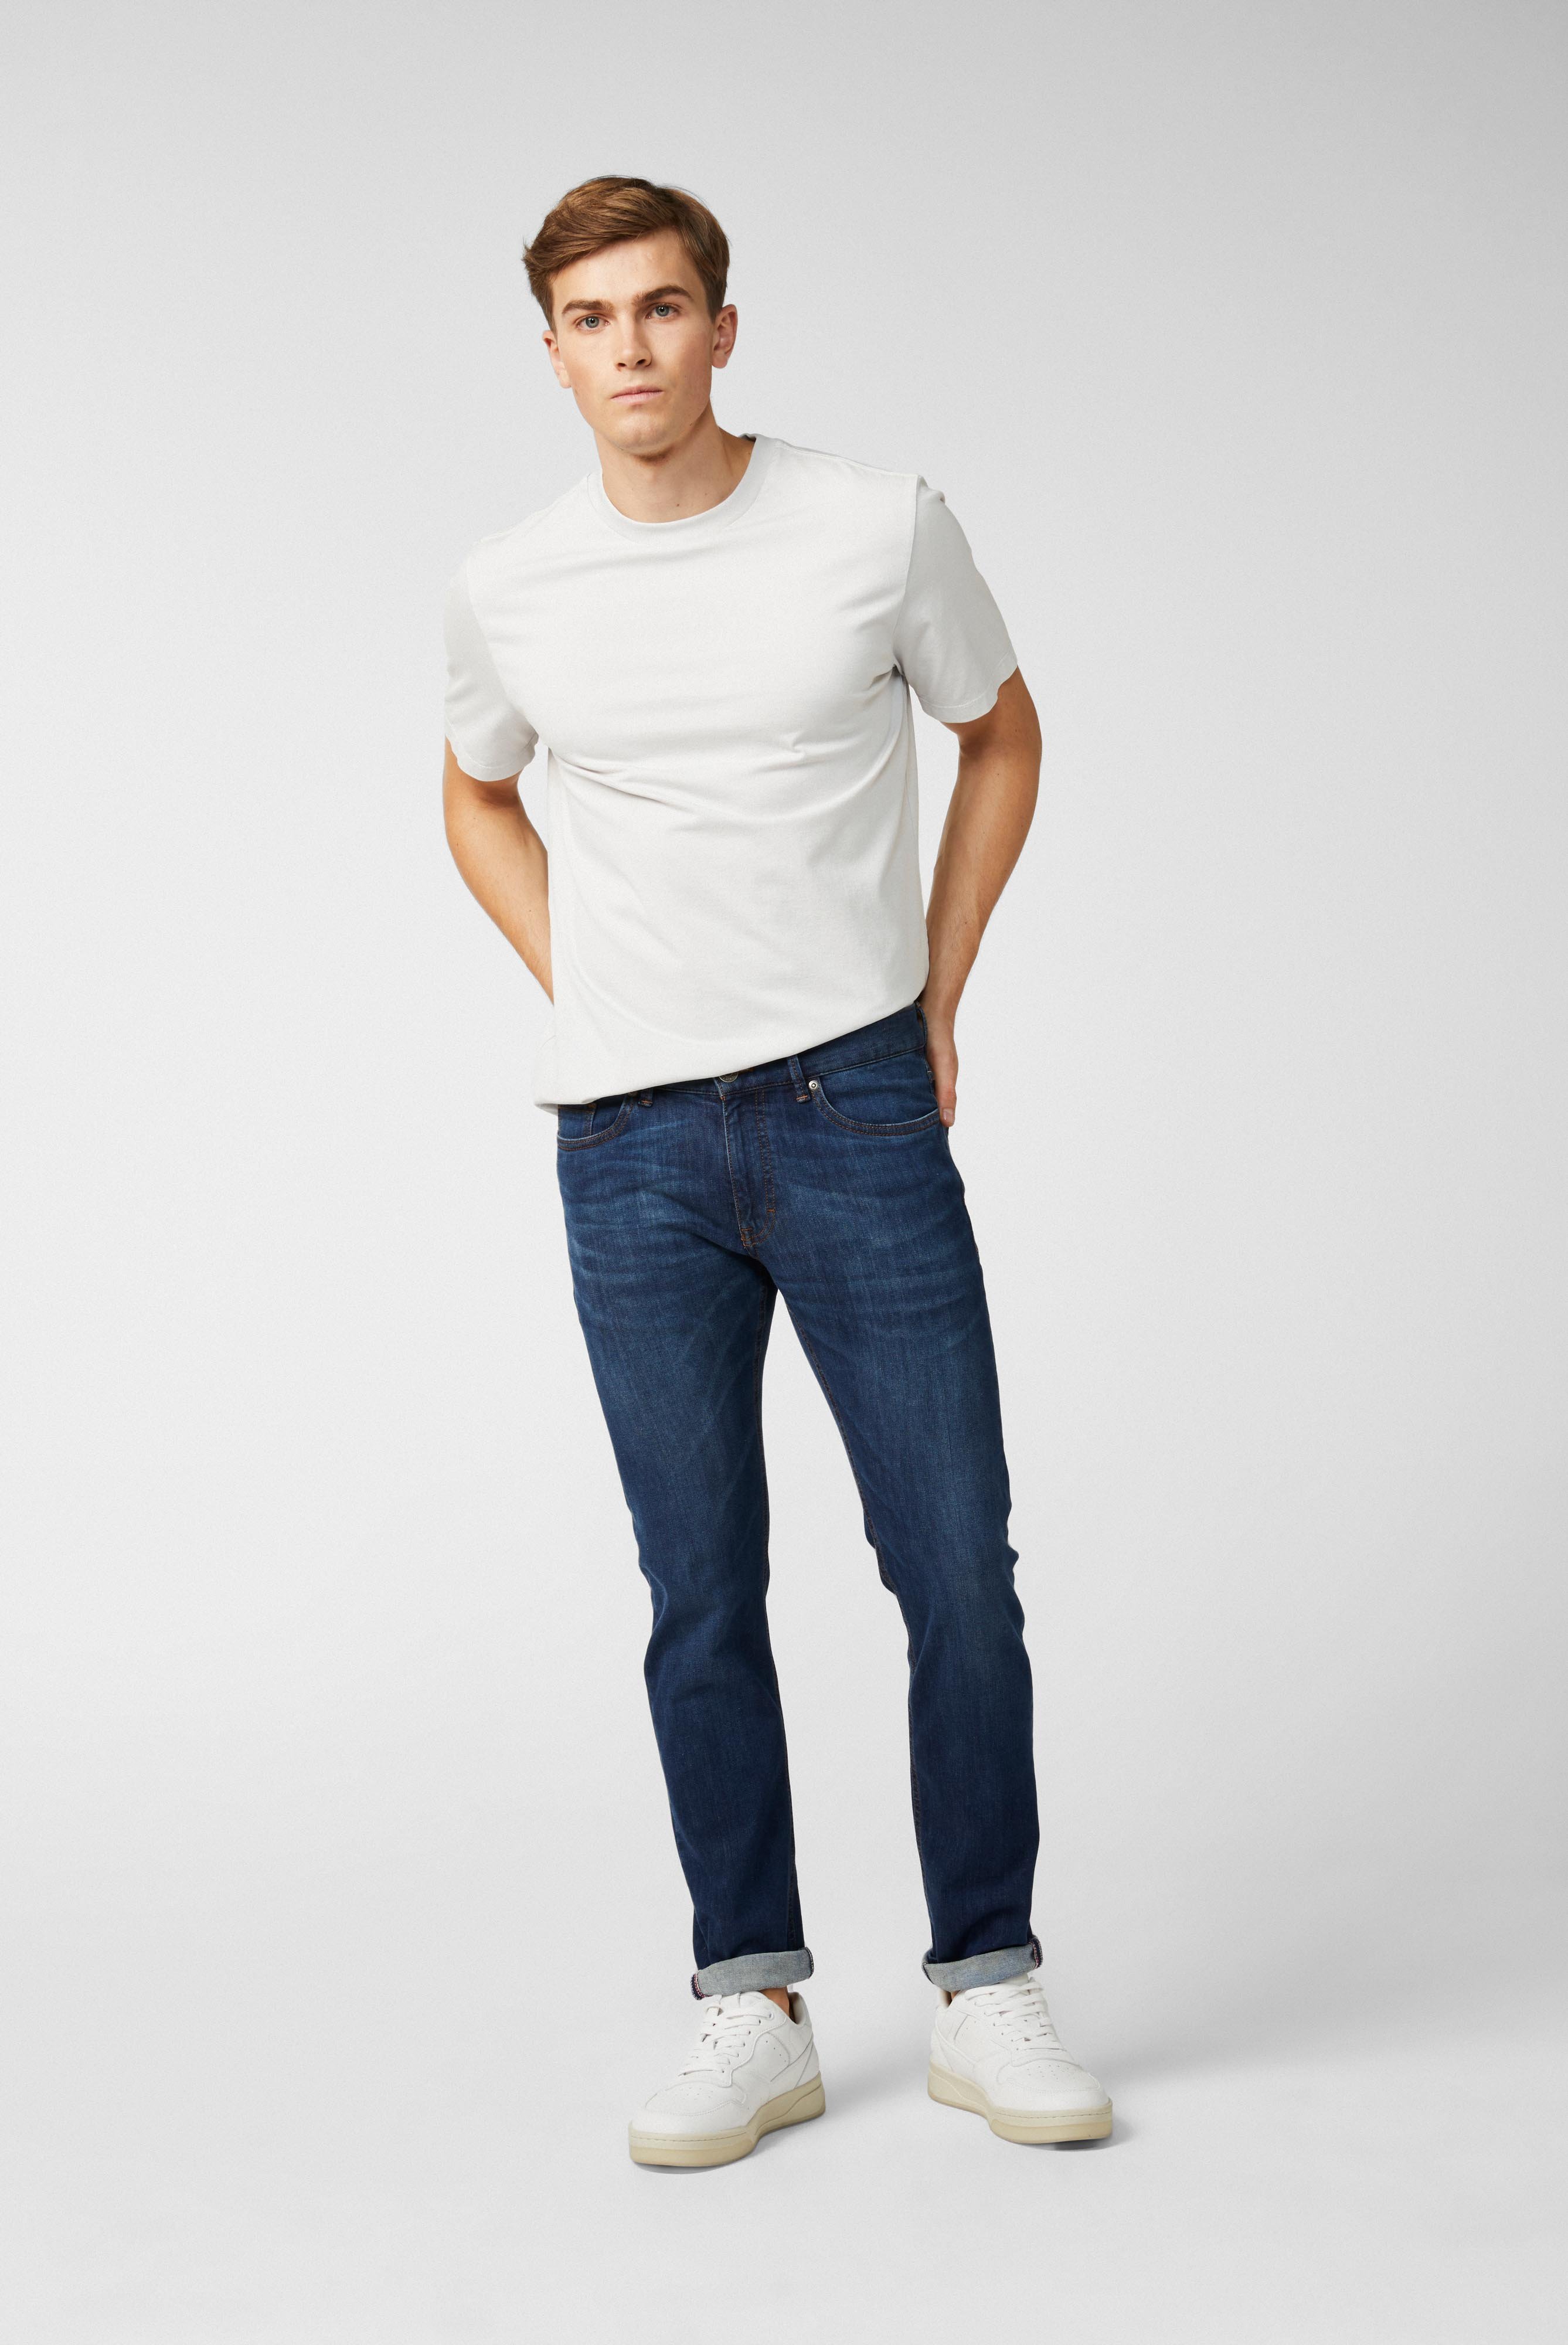 Jeans & Hosen+Jeanshose mit Streth Slim Fit+80.7857..J00117.780.33N